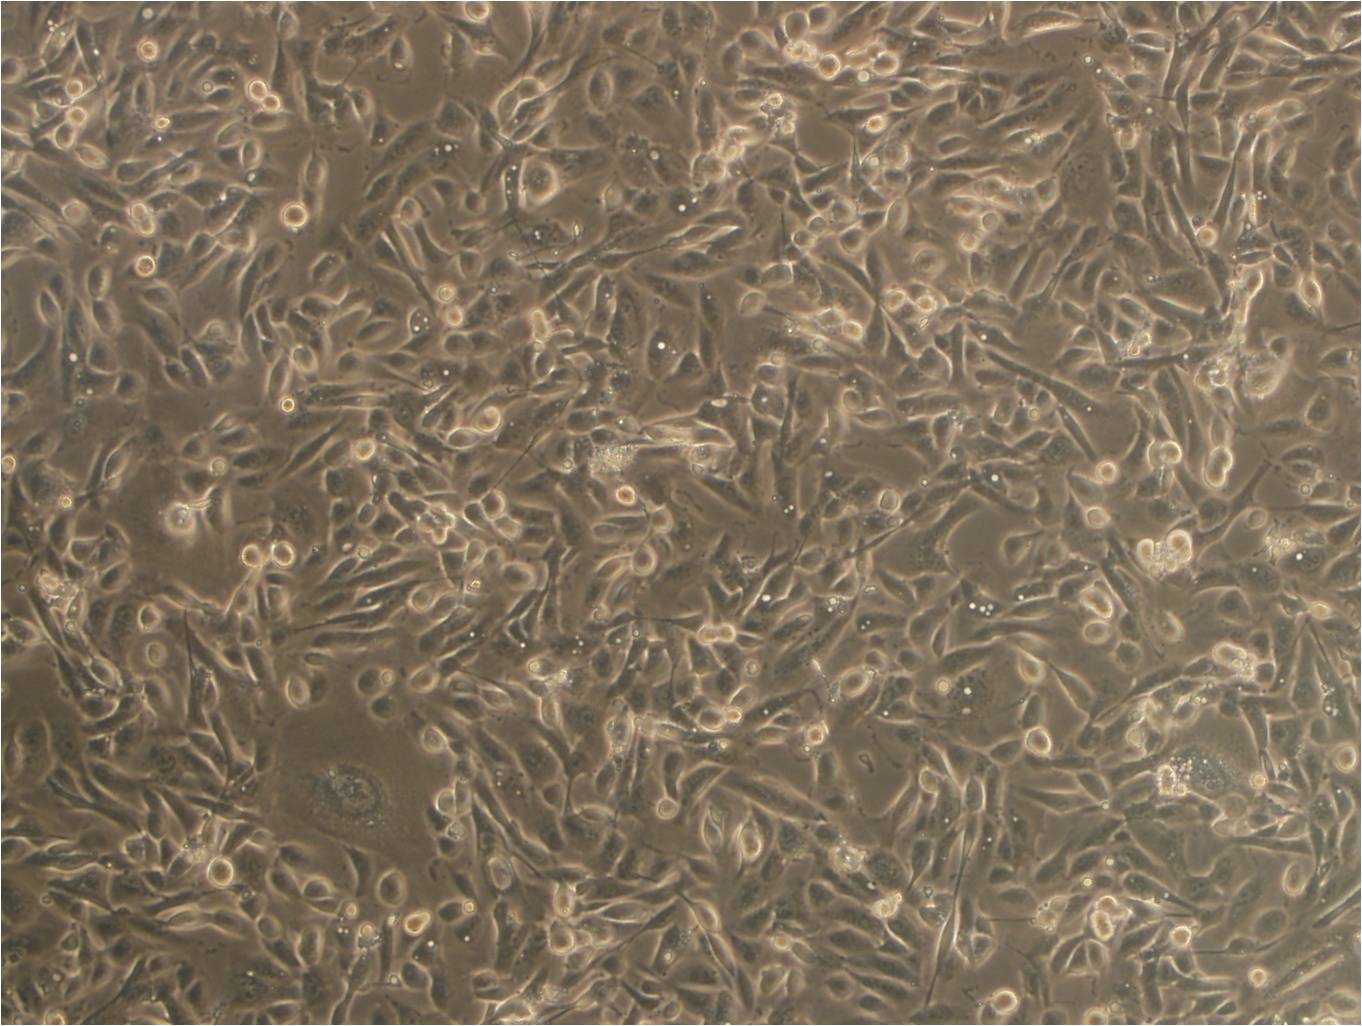 Nthy-ori 3-1 cell line人甲状腺正常细胞系